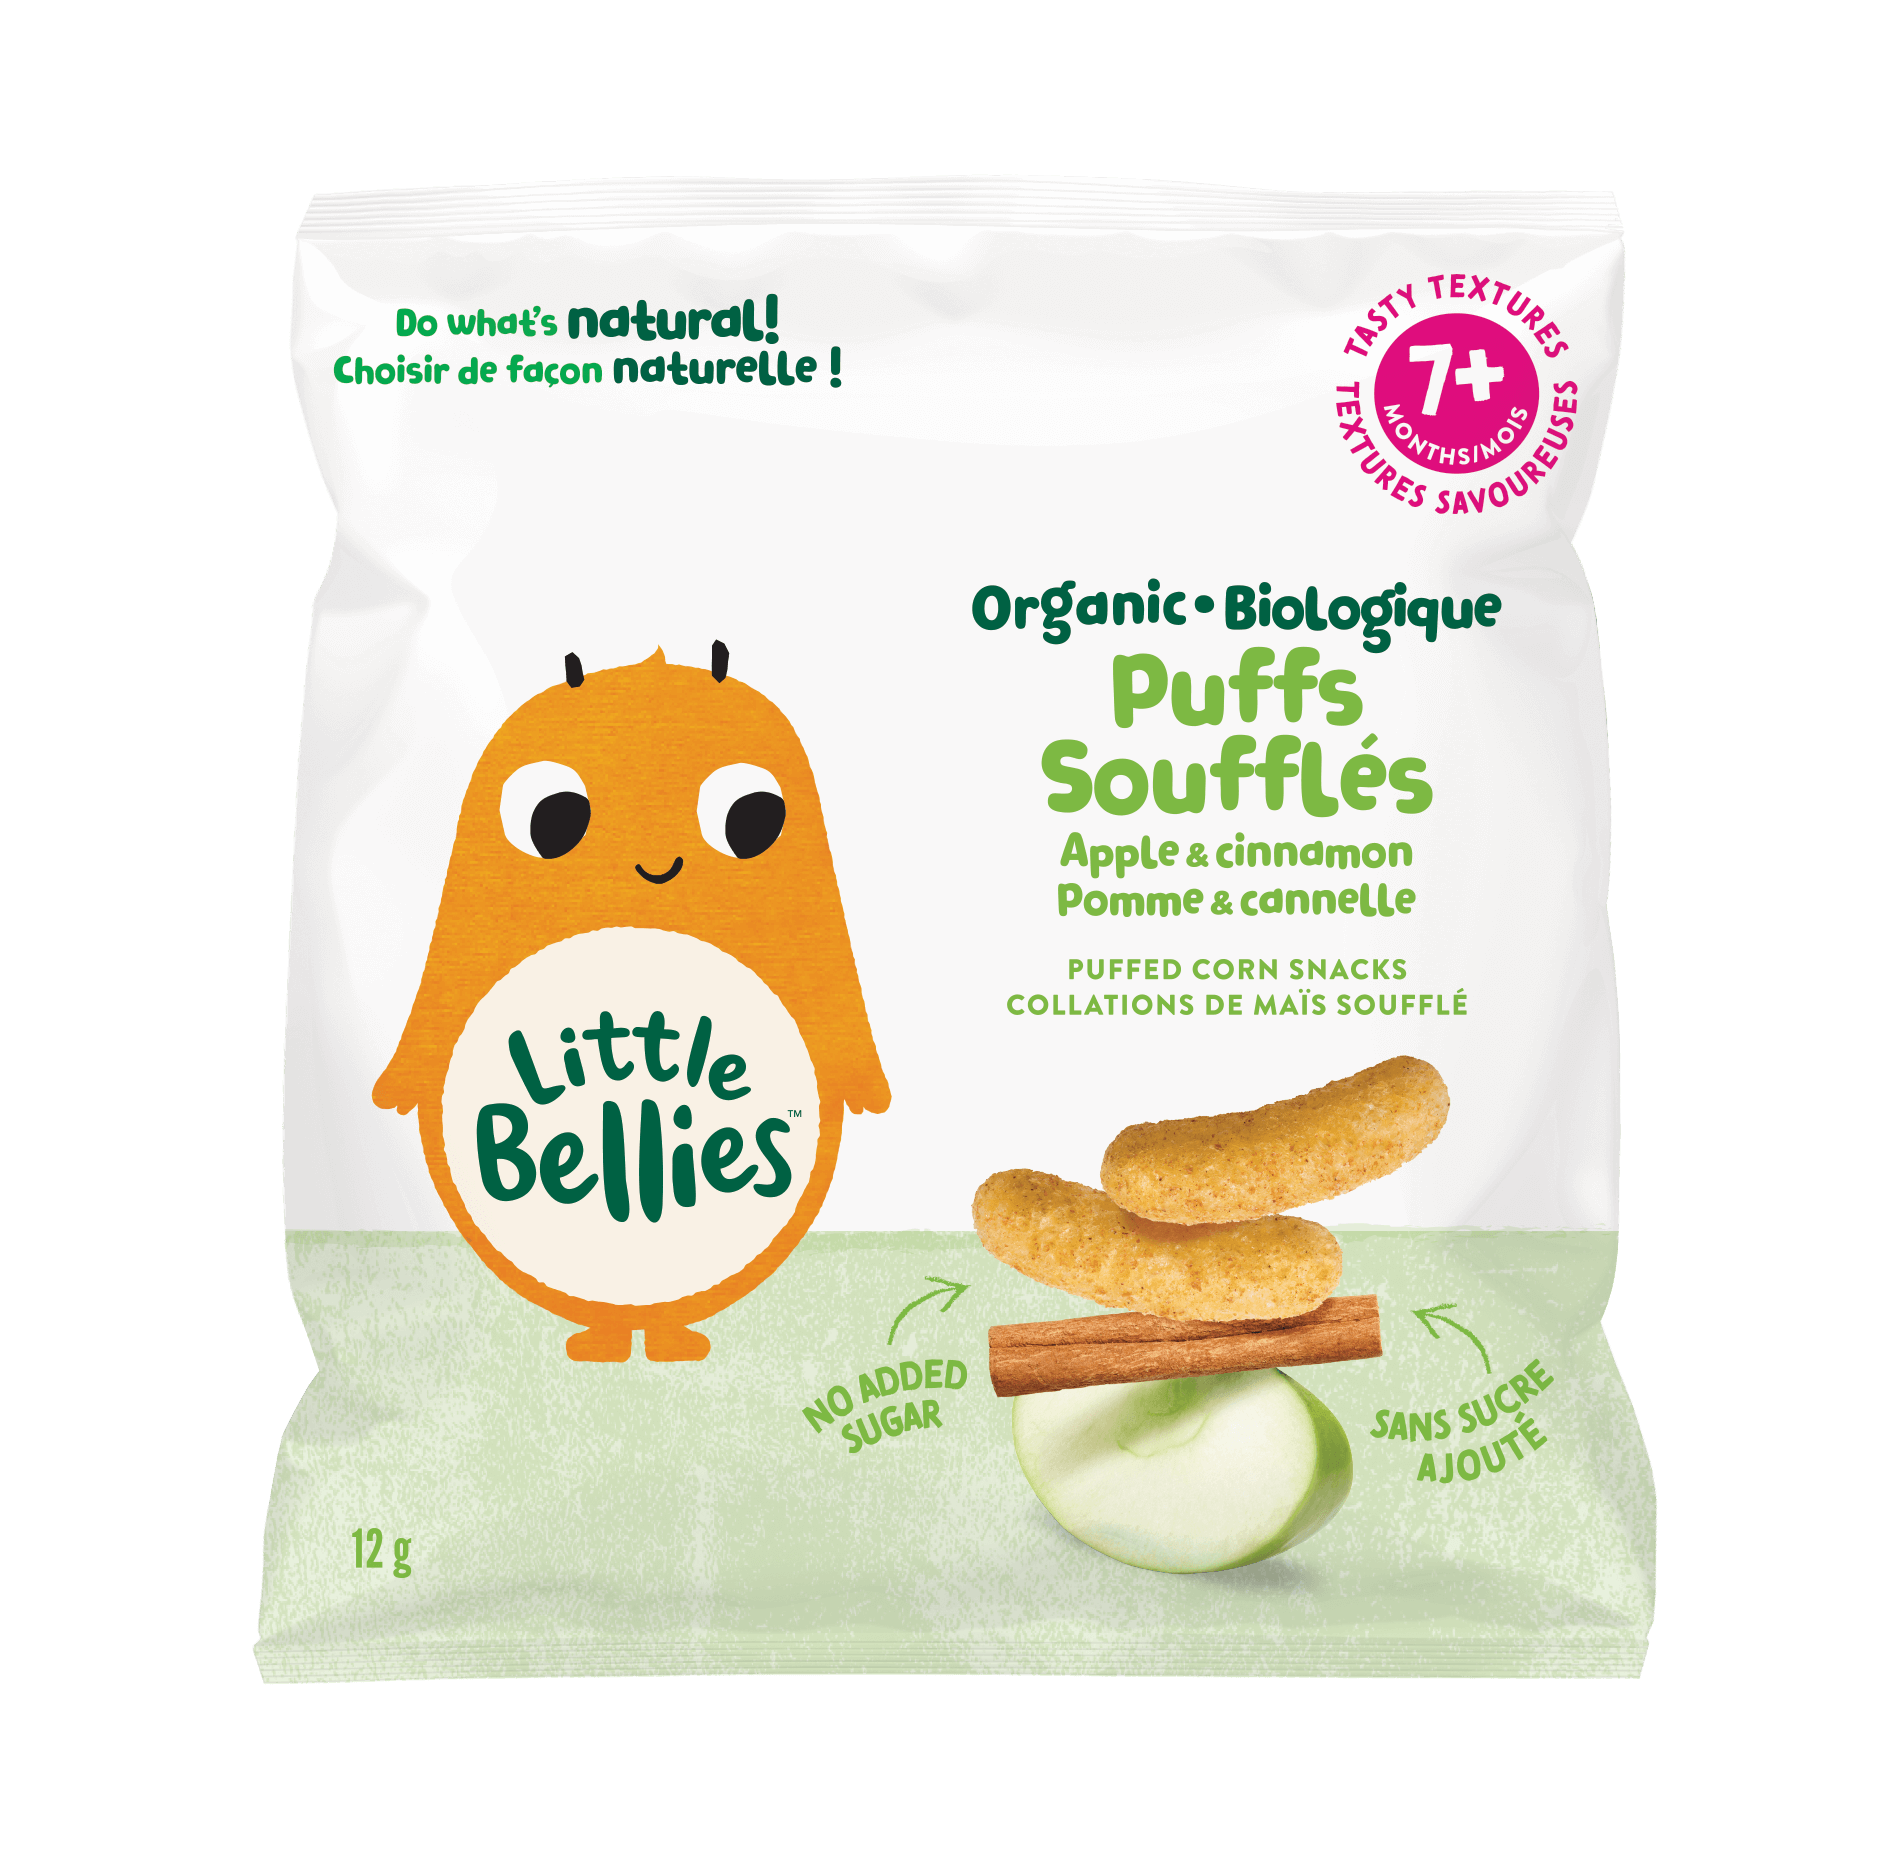 Little Bellies Organic Apple & Cinnamon Puffs